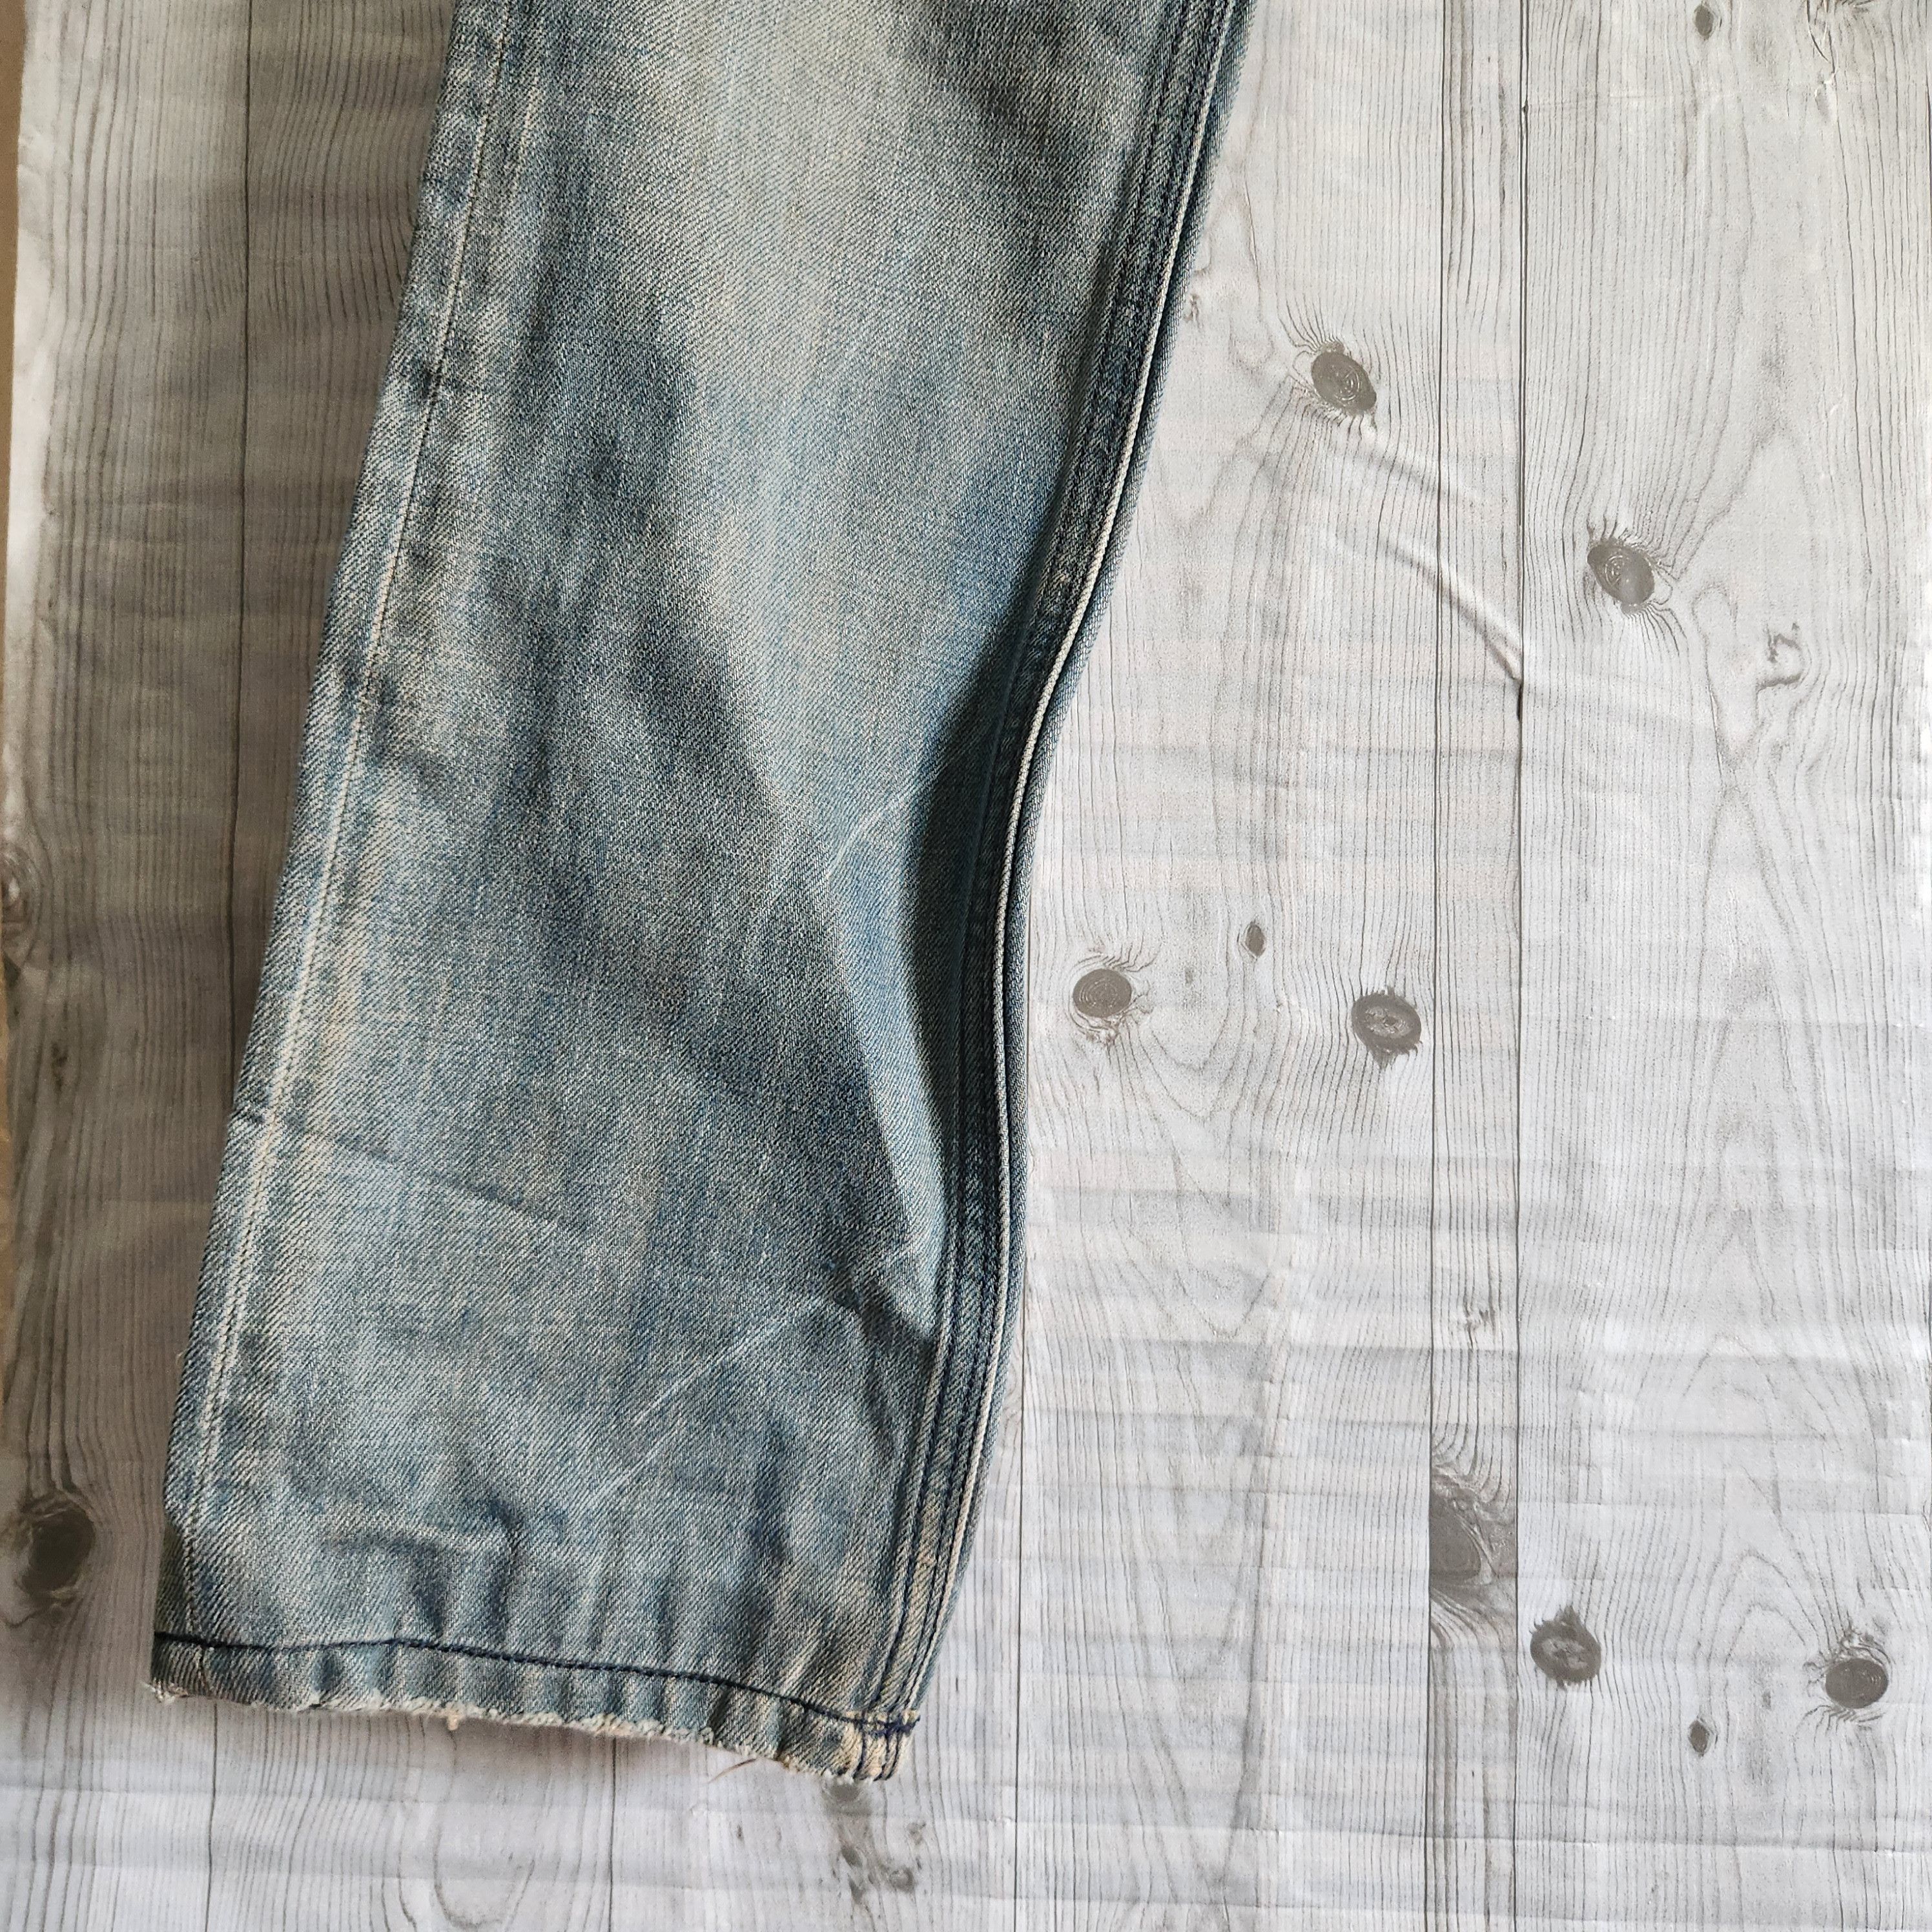 Vintage Diesel Thanaz Denim Jeans Made In Italy - 17